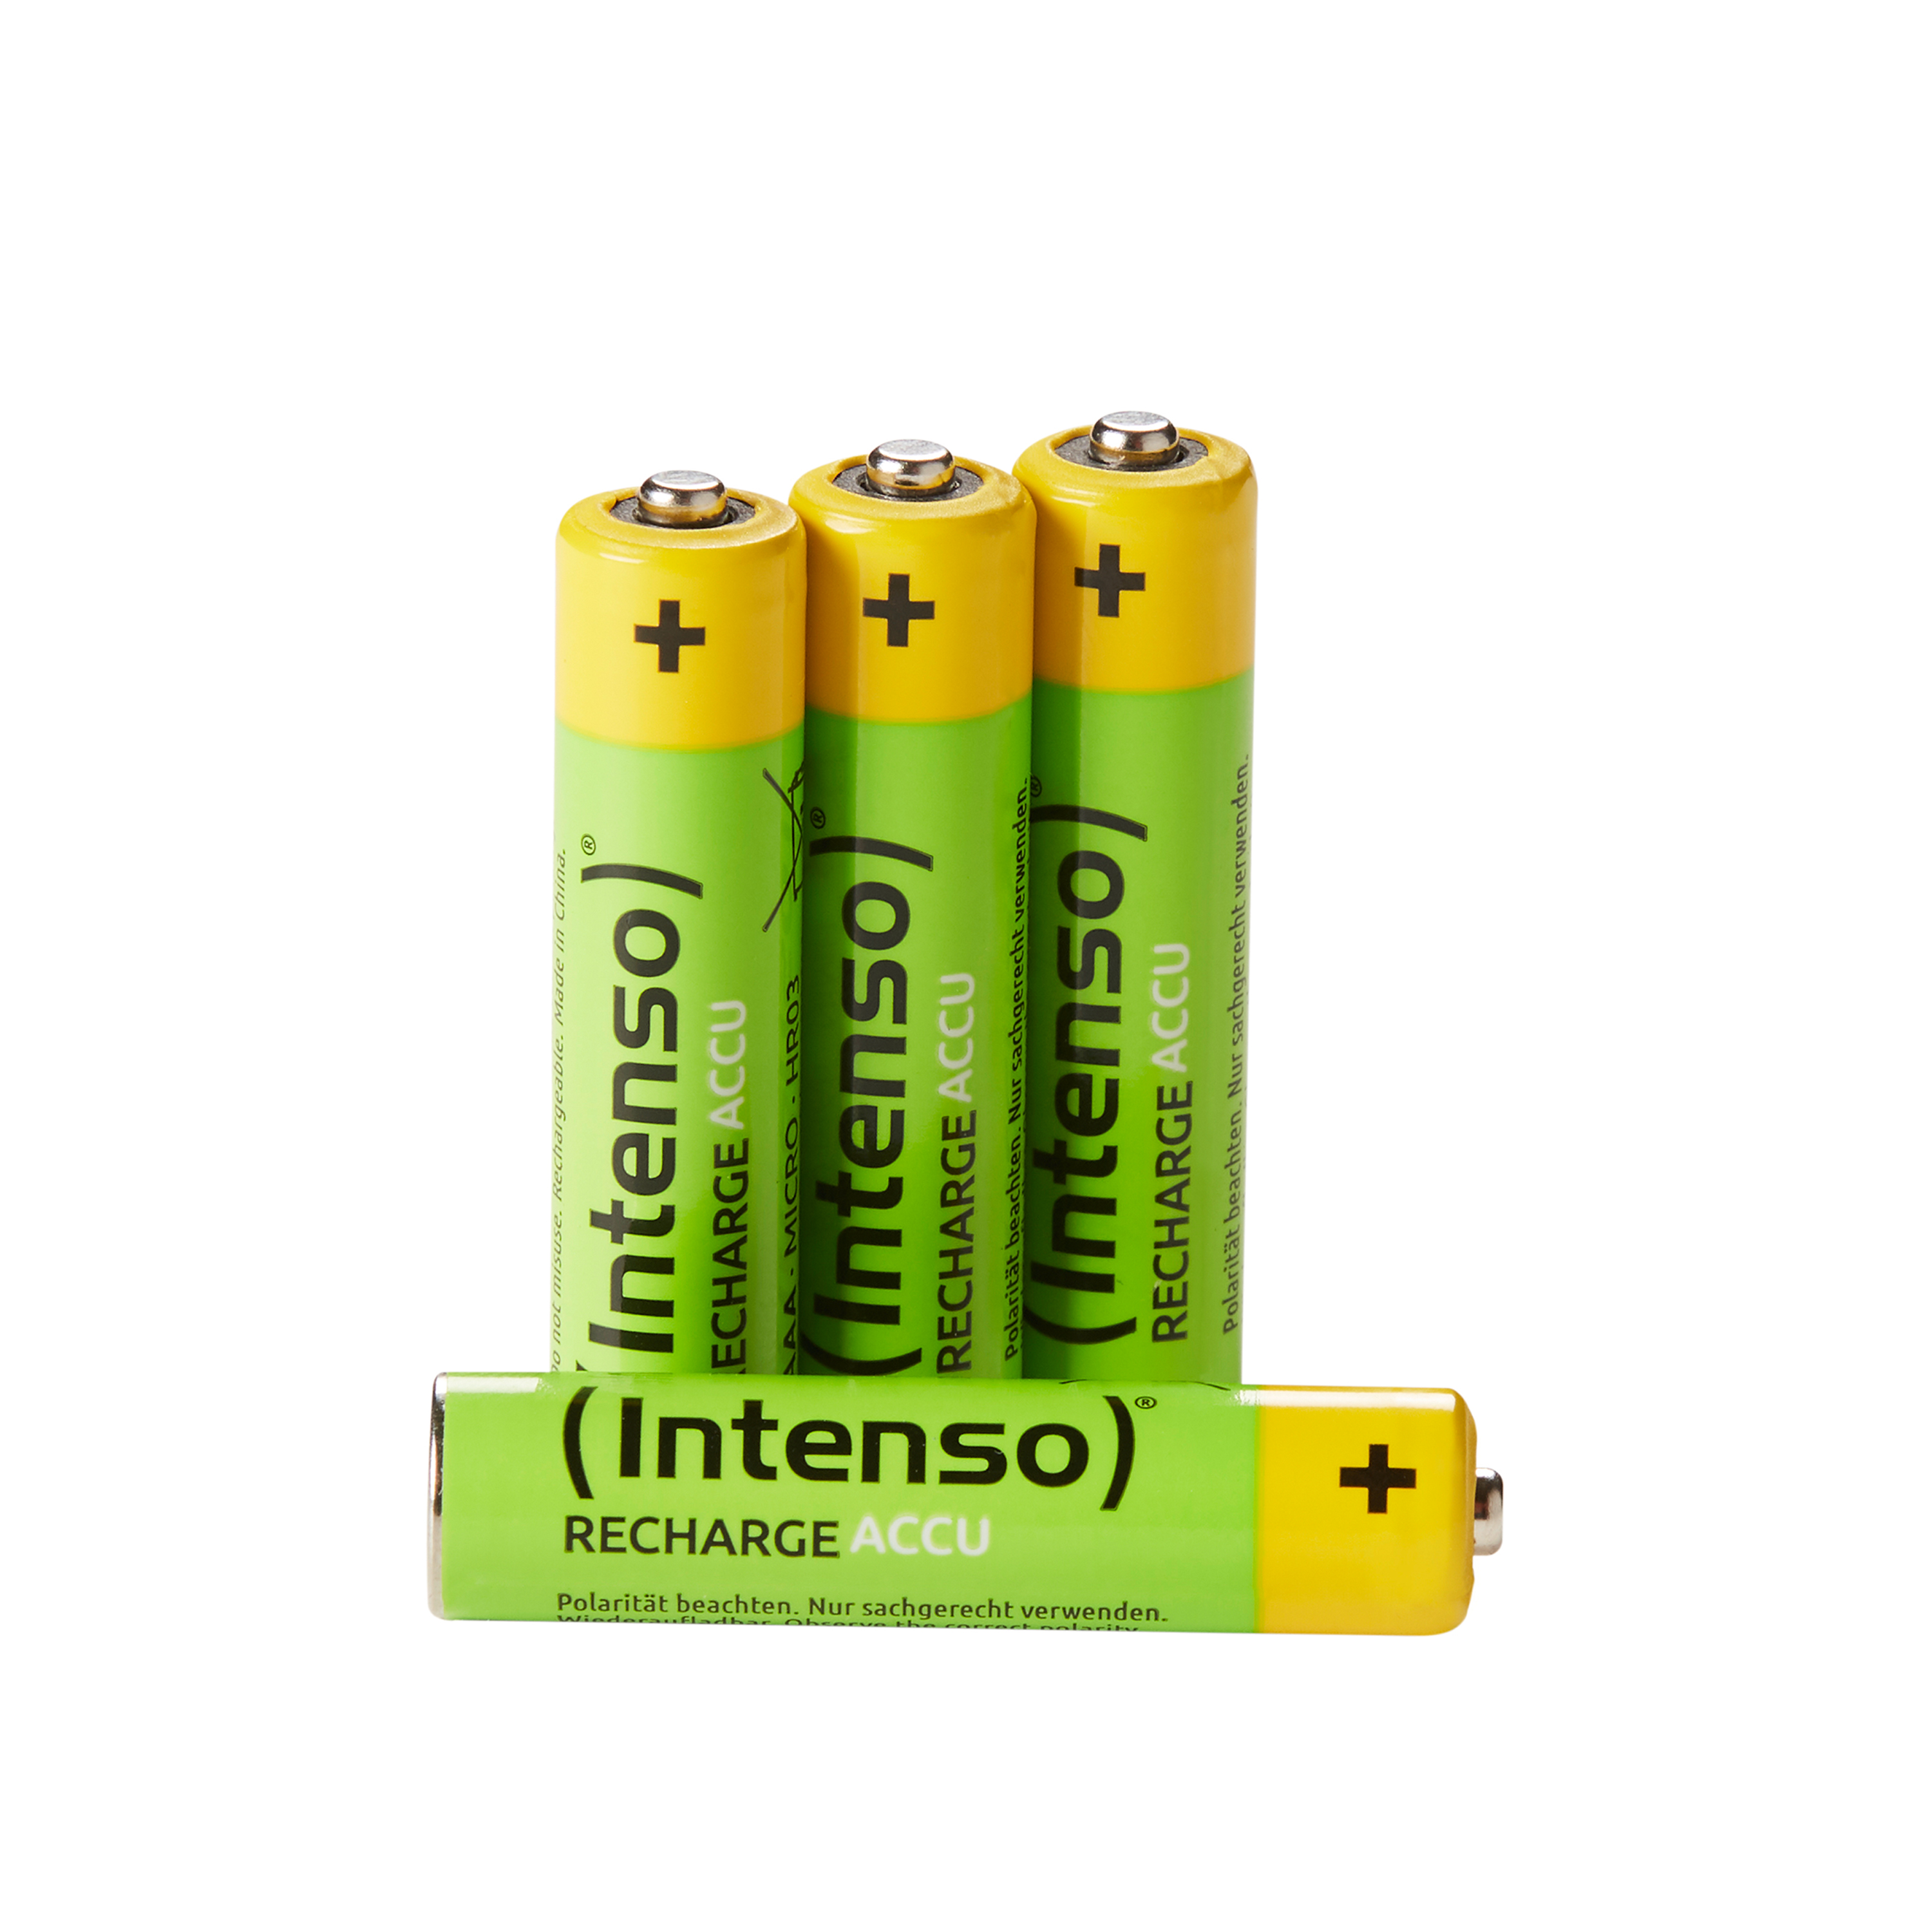 Wiederaufladbare Energy Pack 850 mAh NiMH INTENSO Eco 4er AAA, Accu Batterie, HR03, AAA HR03 Mignon, (Nickel-Metallhydrid) mAh 850 Batterie